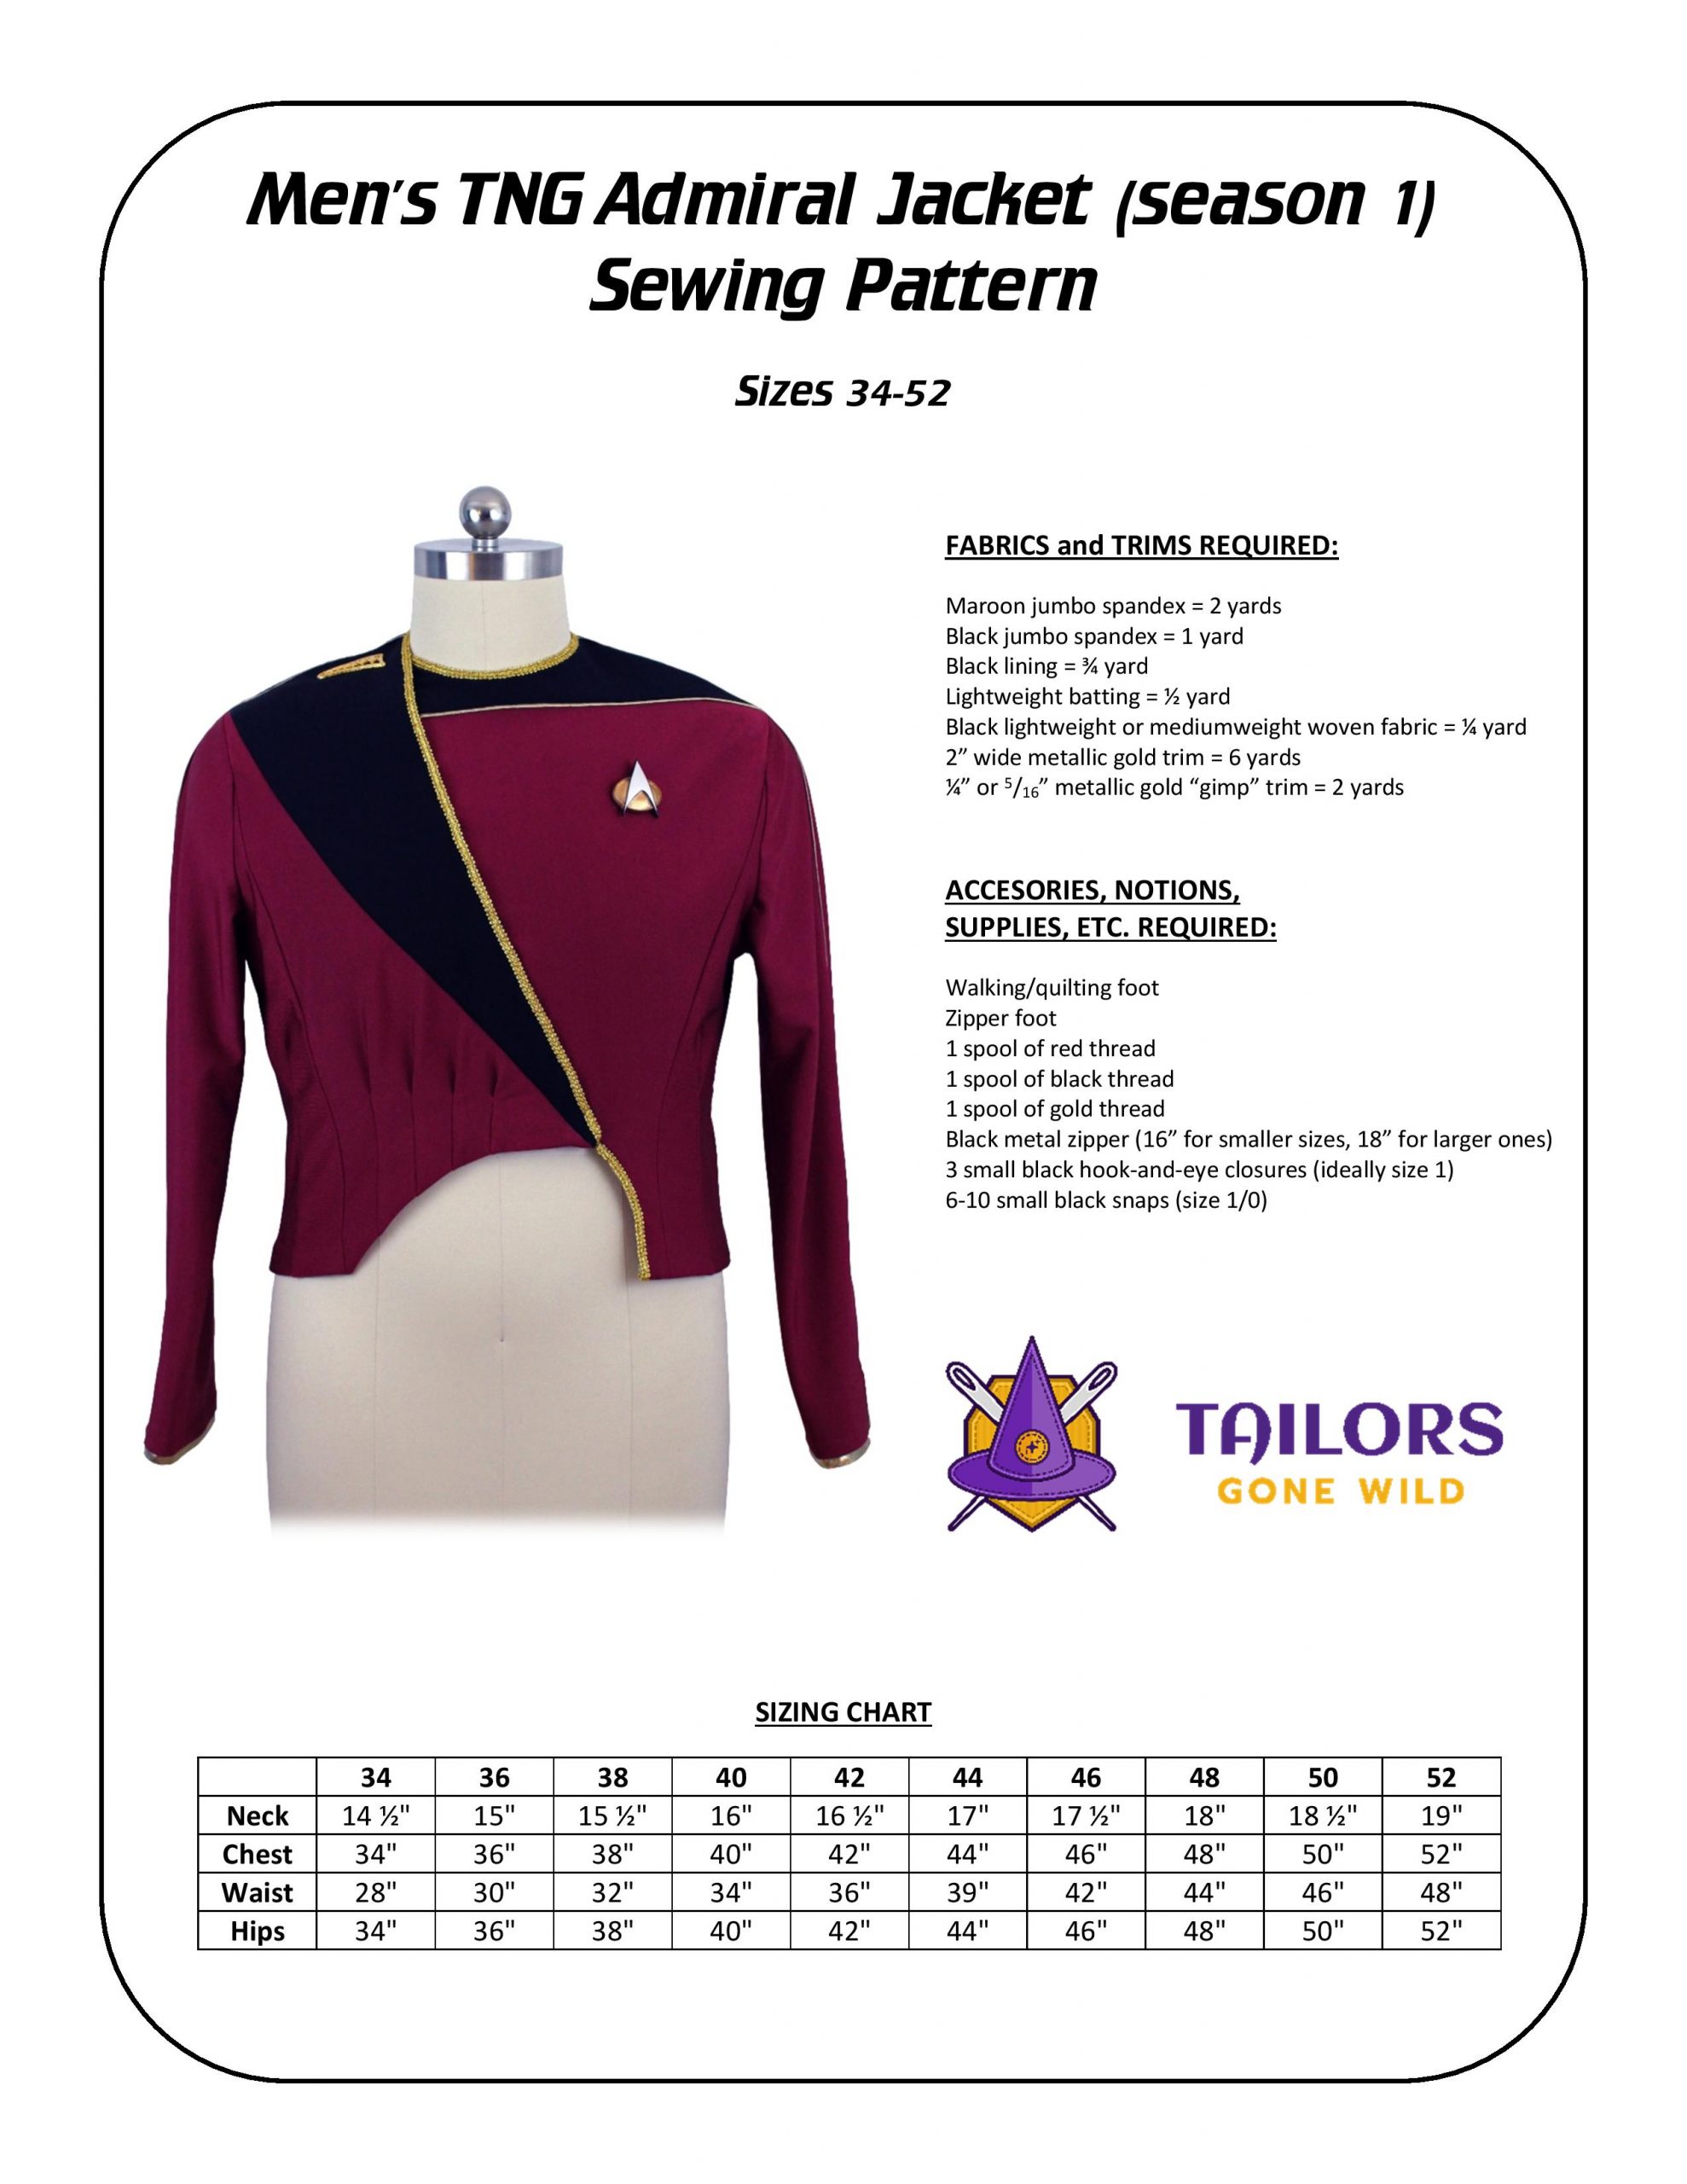 TNG season 1 admiral sewing pattern - Tailors Gone Wild